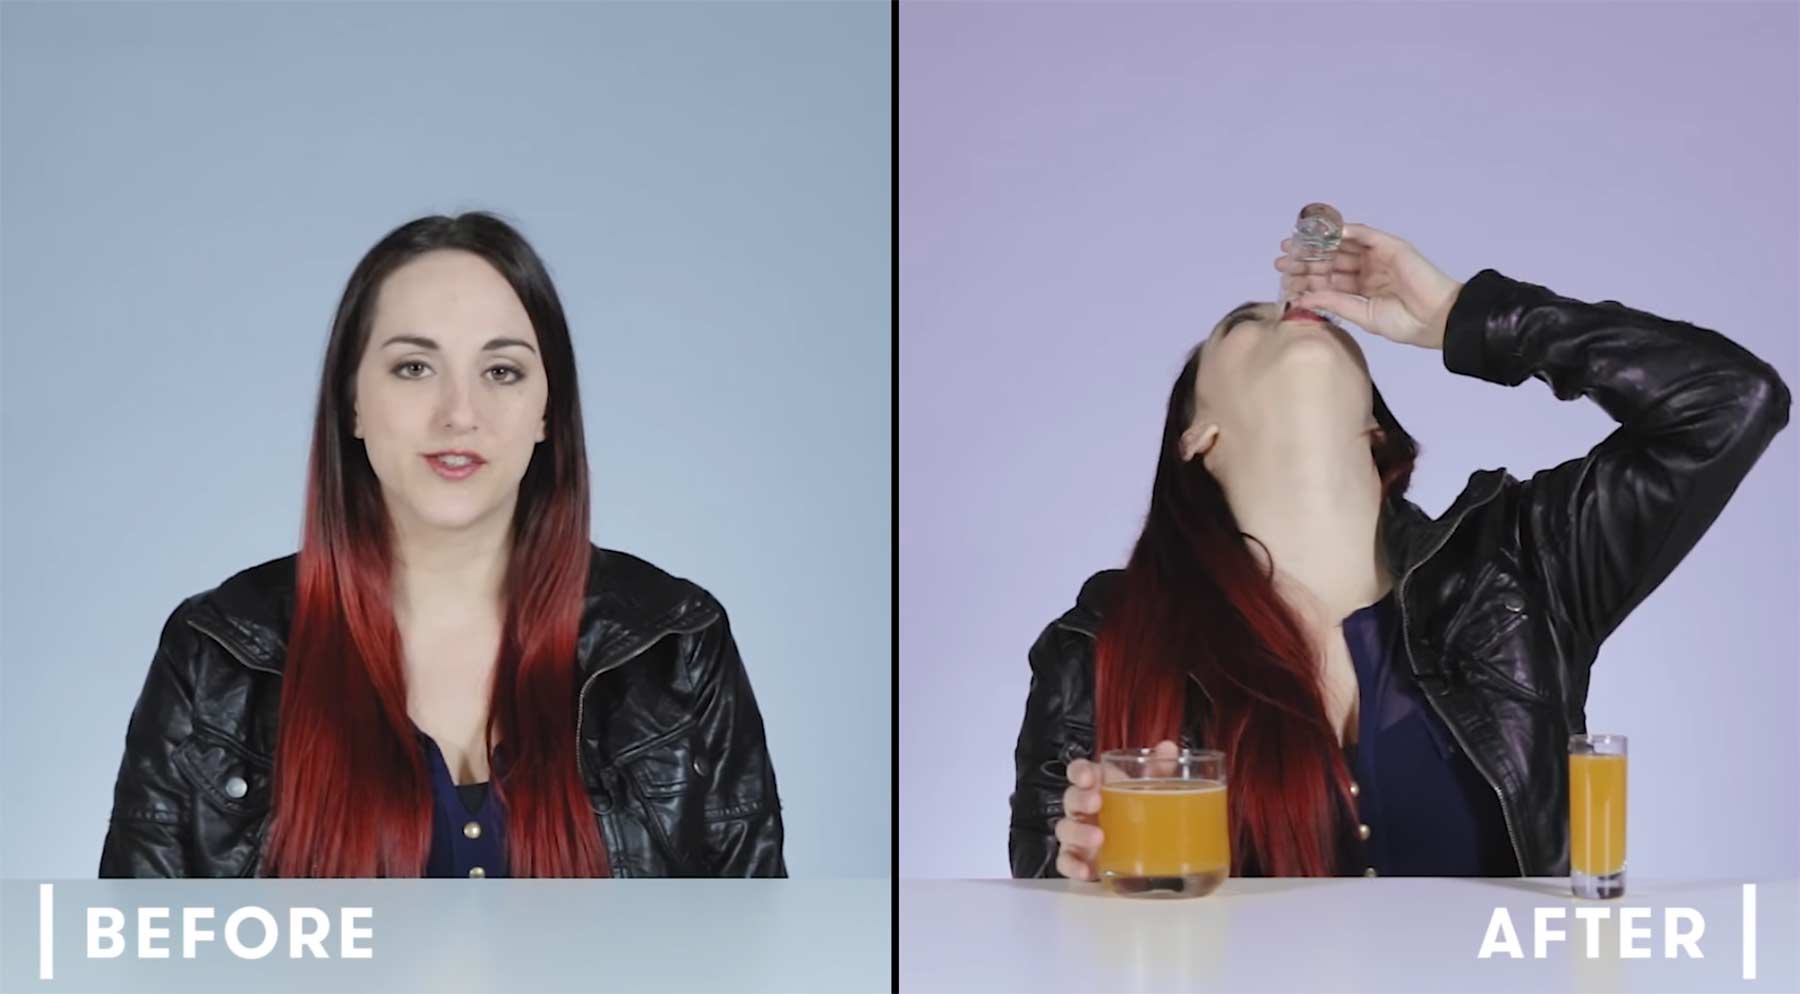 Nüchtern vs. angetrunken auf Liebesfragen antworten People-Answer-Questions-About-Love-Before-and-After-Drinking 